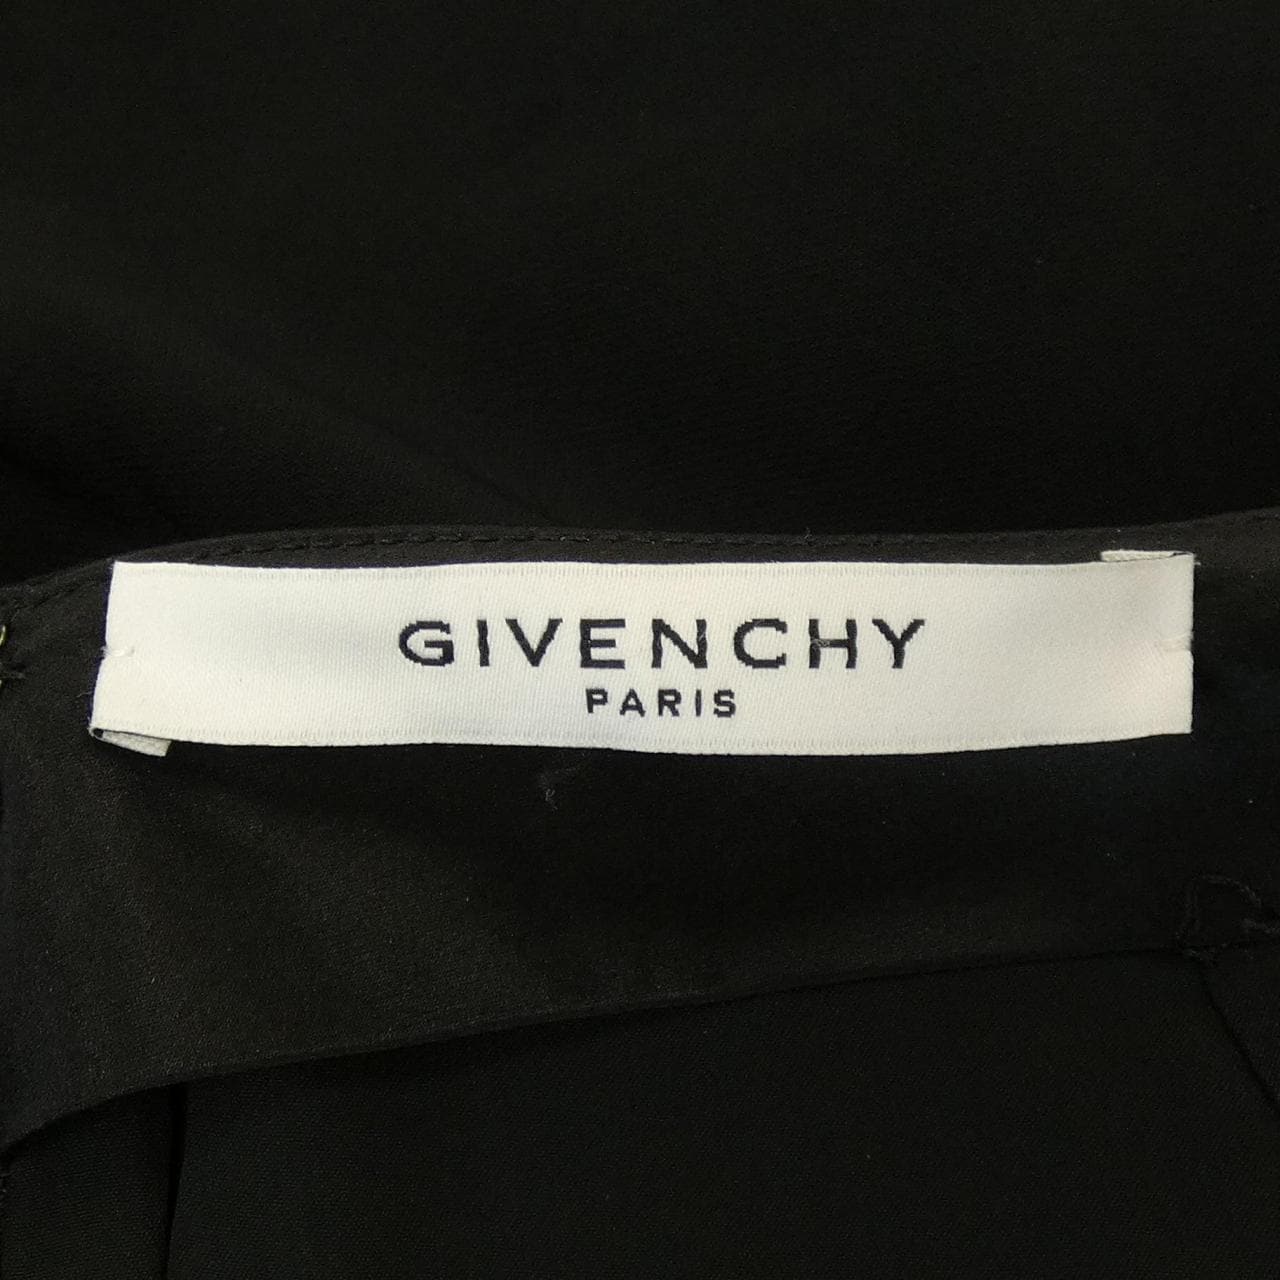 GIVENCHY skirt